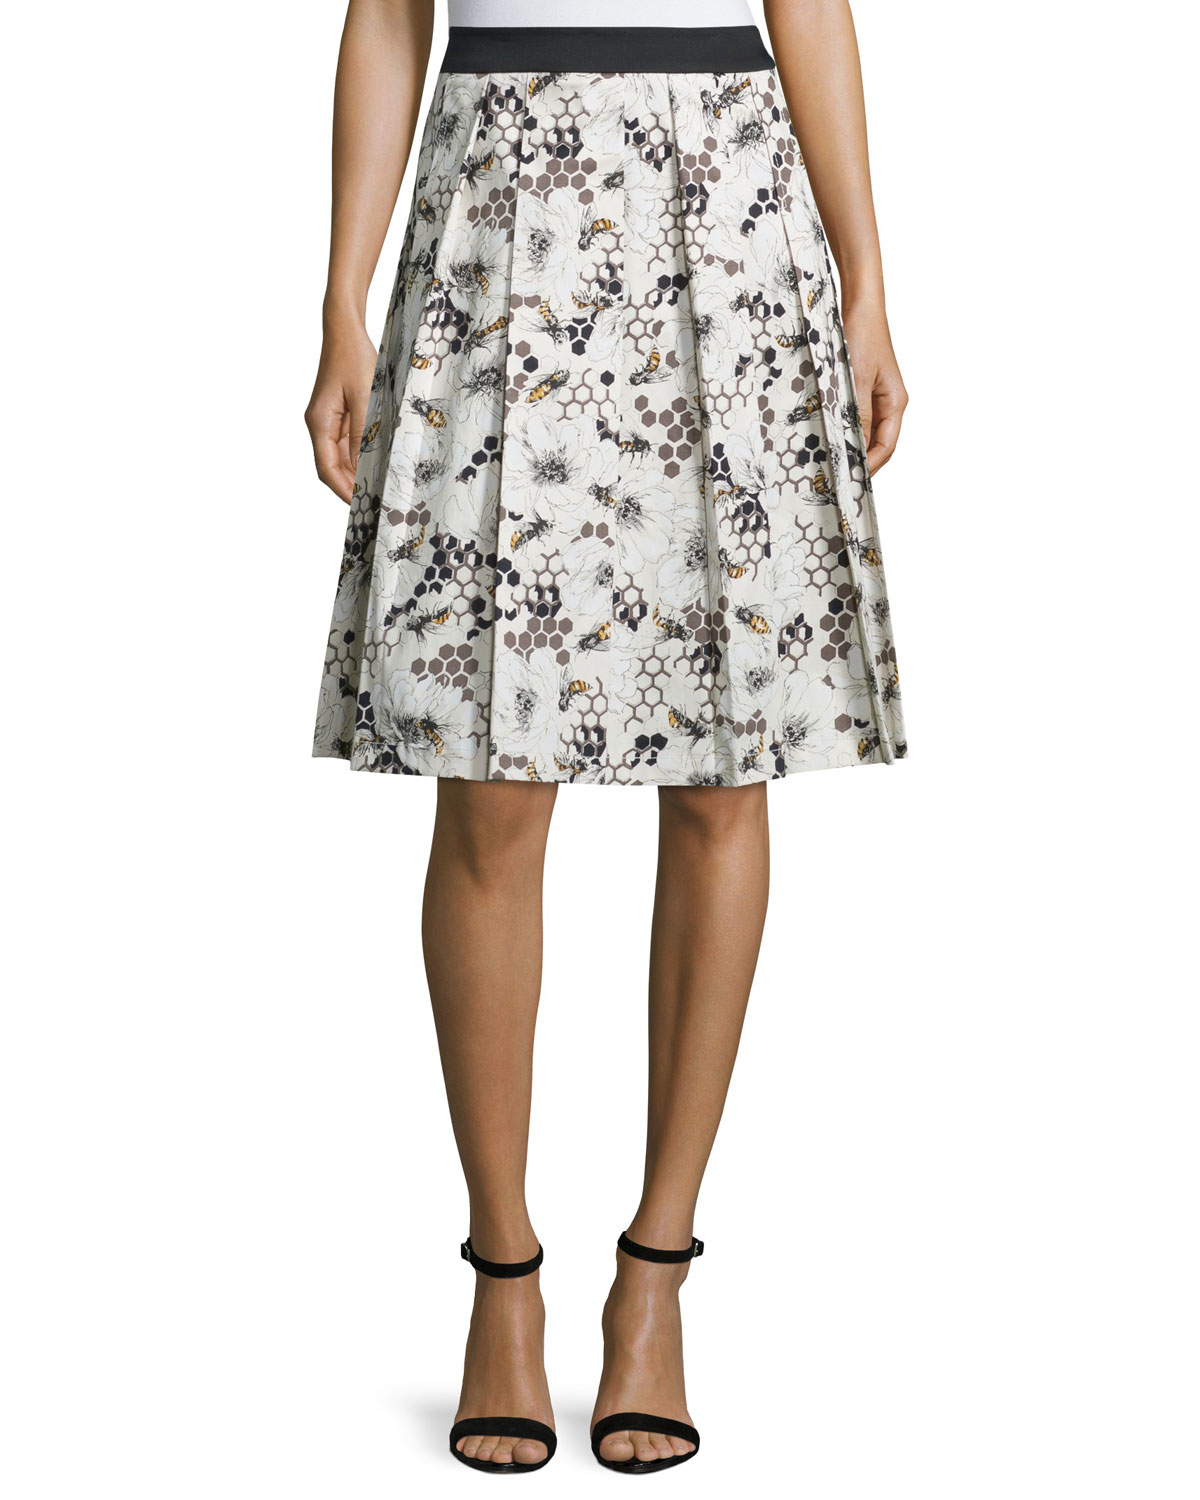 Lyst - Carolina Herrera Bee-&-honeycomb Print A-line Skirt in Brown